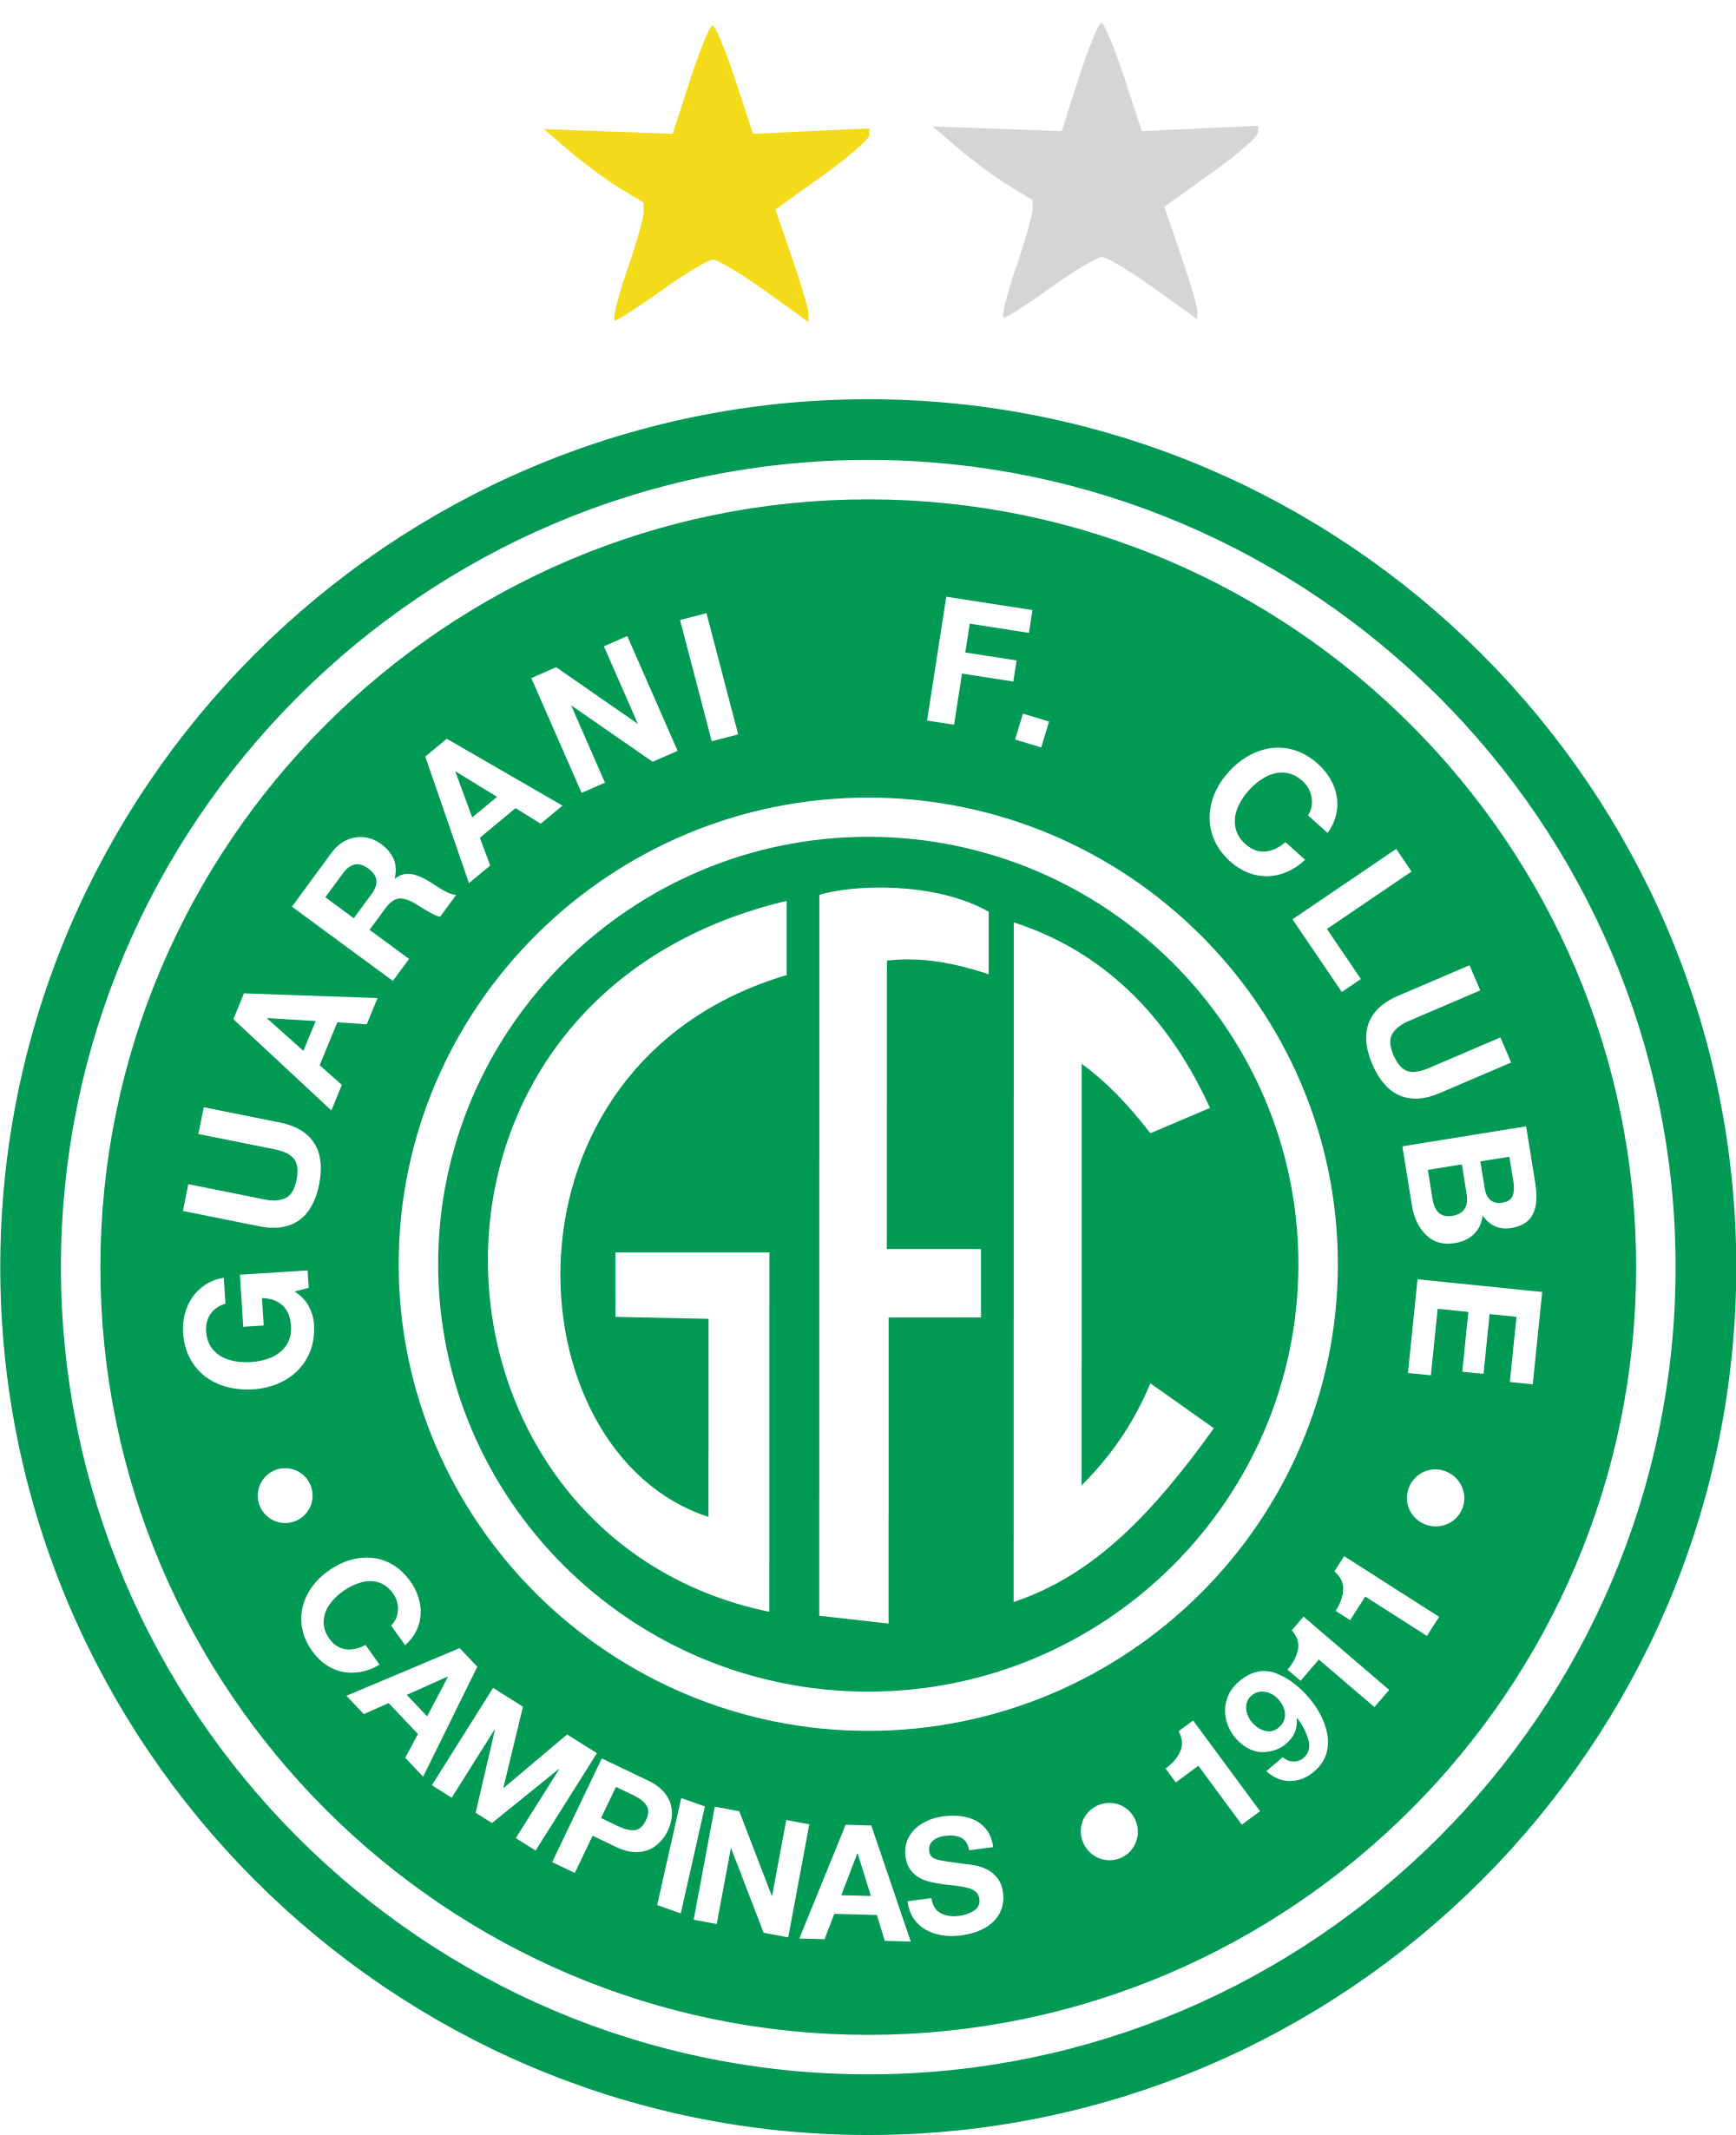 A Guarani vector logo .